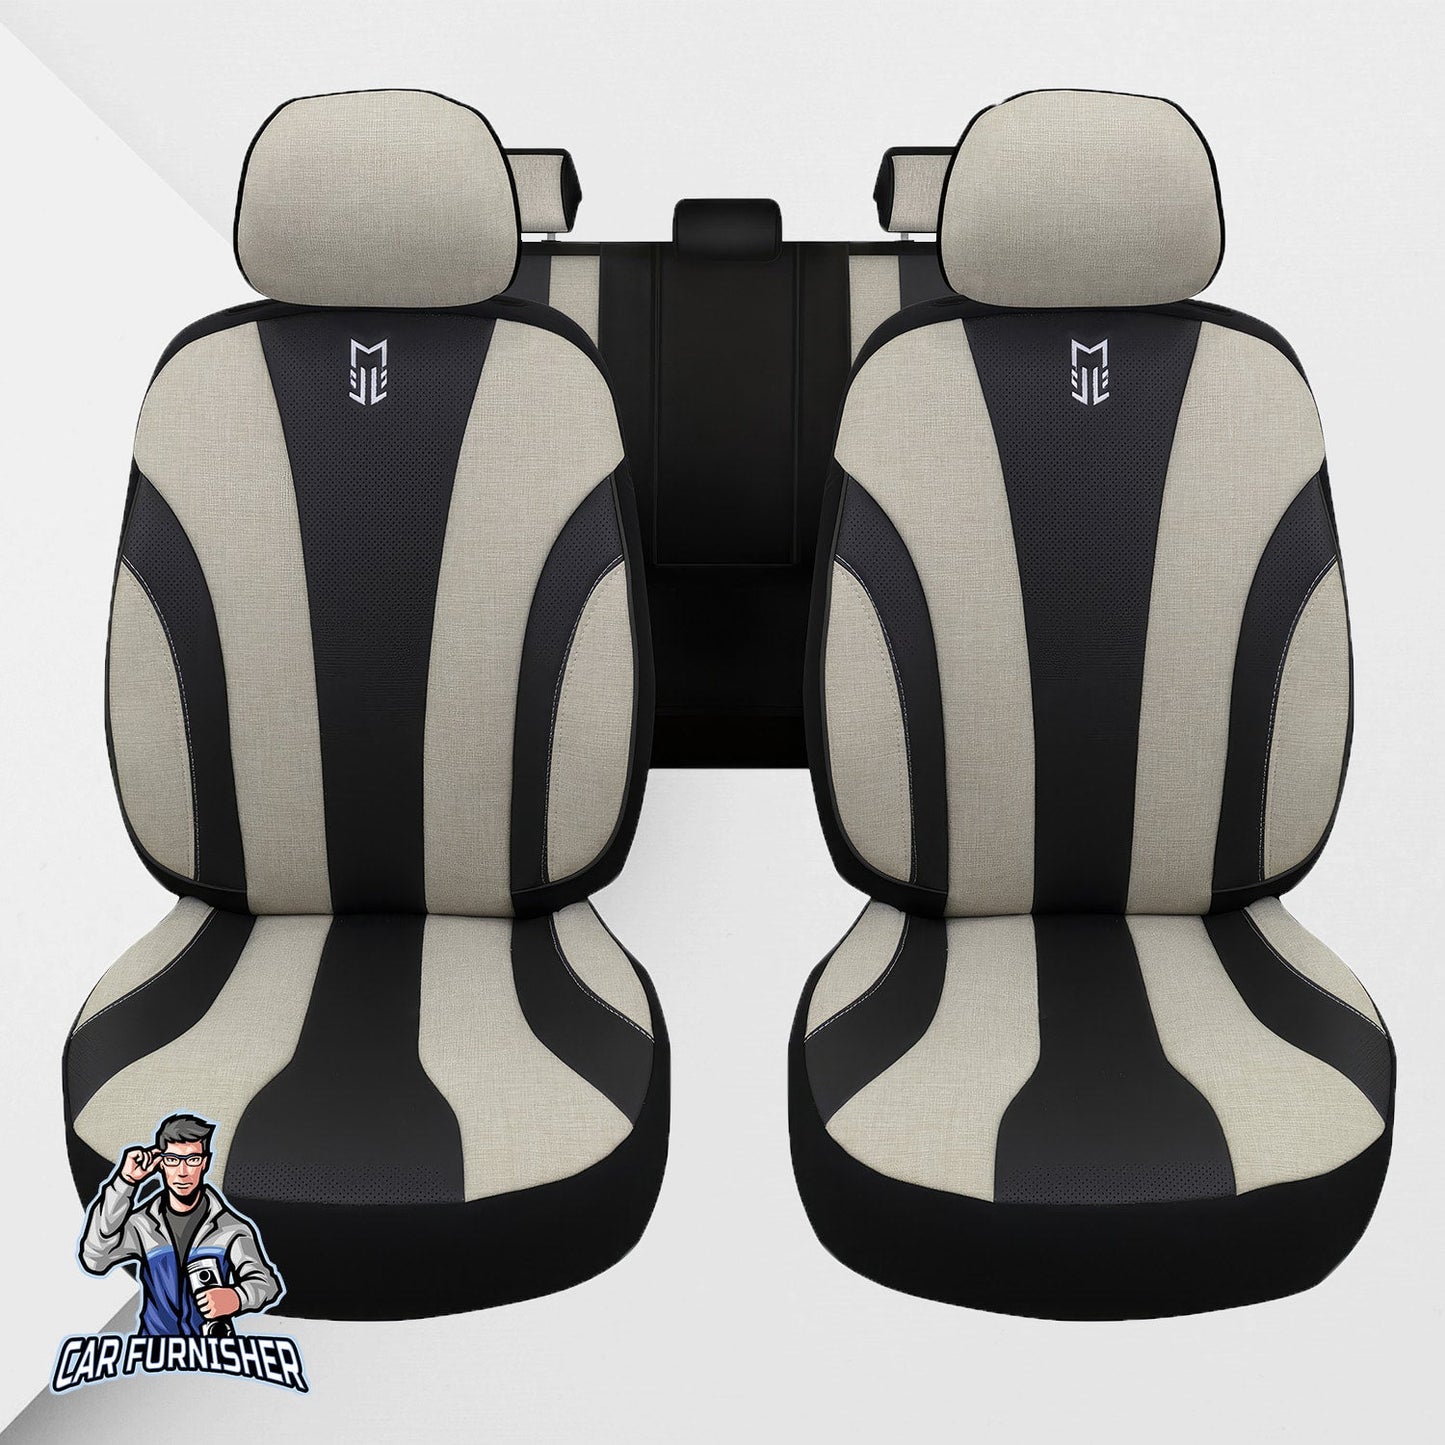 Mercedes 190 Seat Covers Medusa Linen Fabric & Leather Design Black 5 Seats + Headrests (Full Set) Leather & Linen Fabric